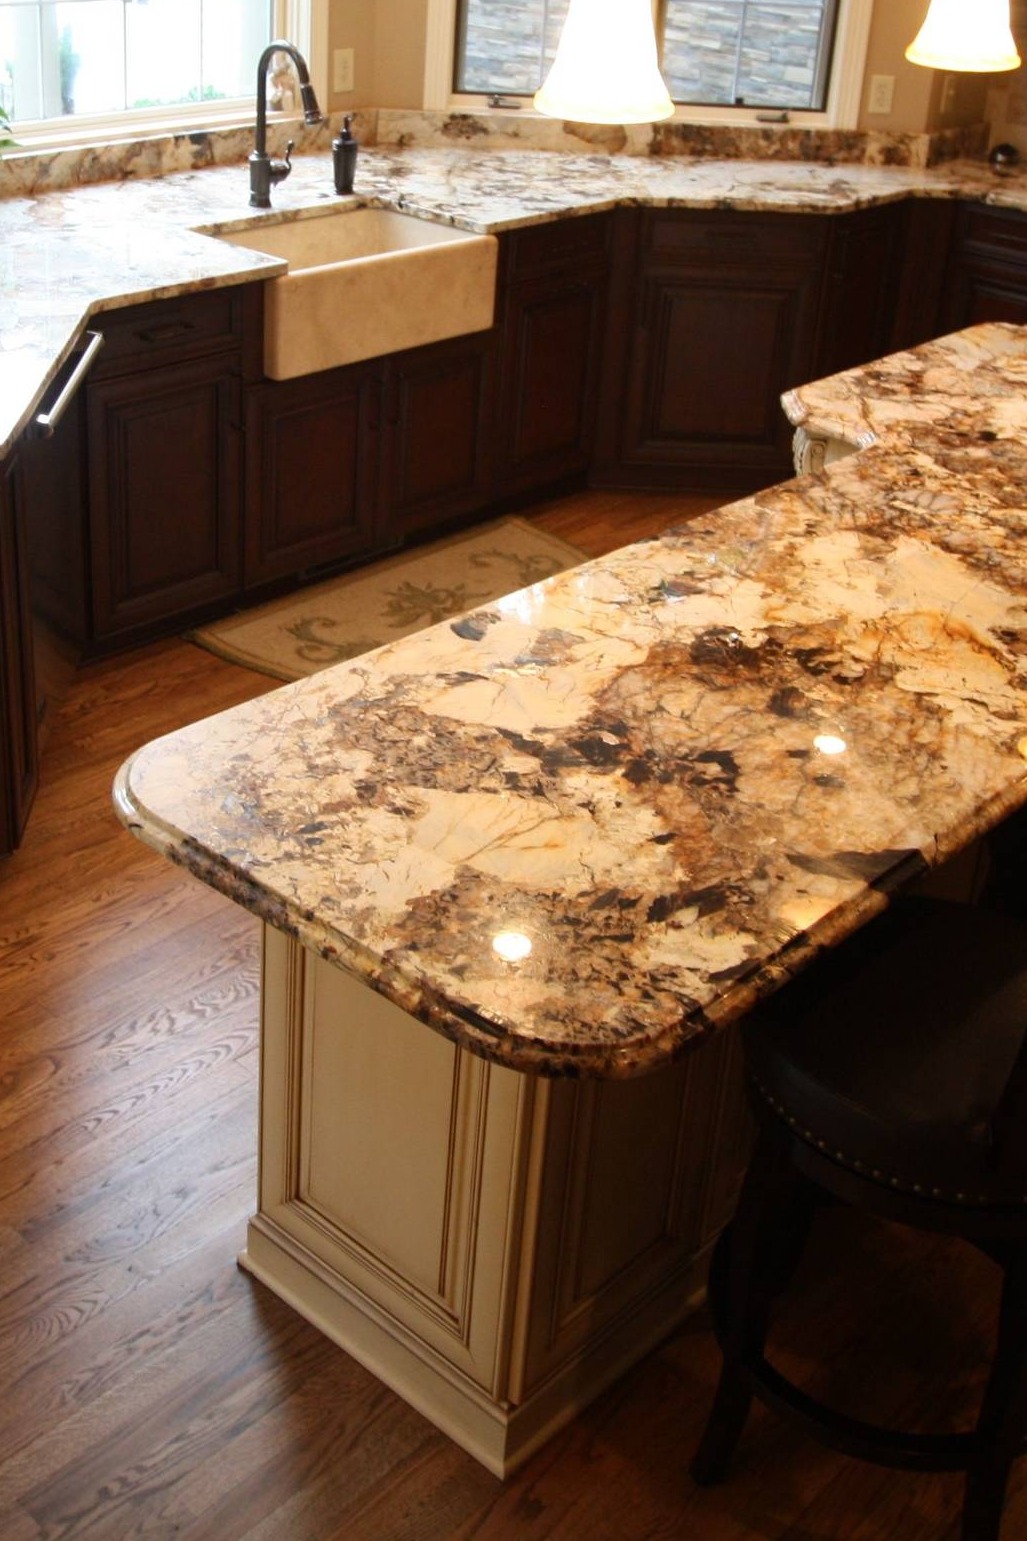 Splendor Gold Granite Countertop Dark Cabinet Hardwood Floor Farm Sink